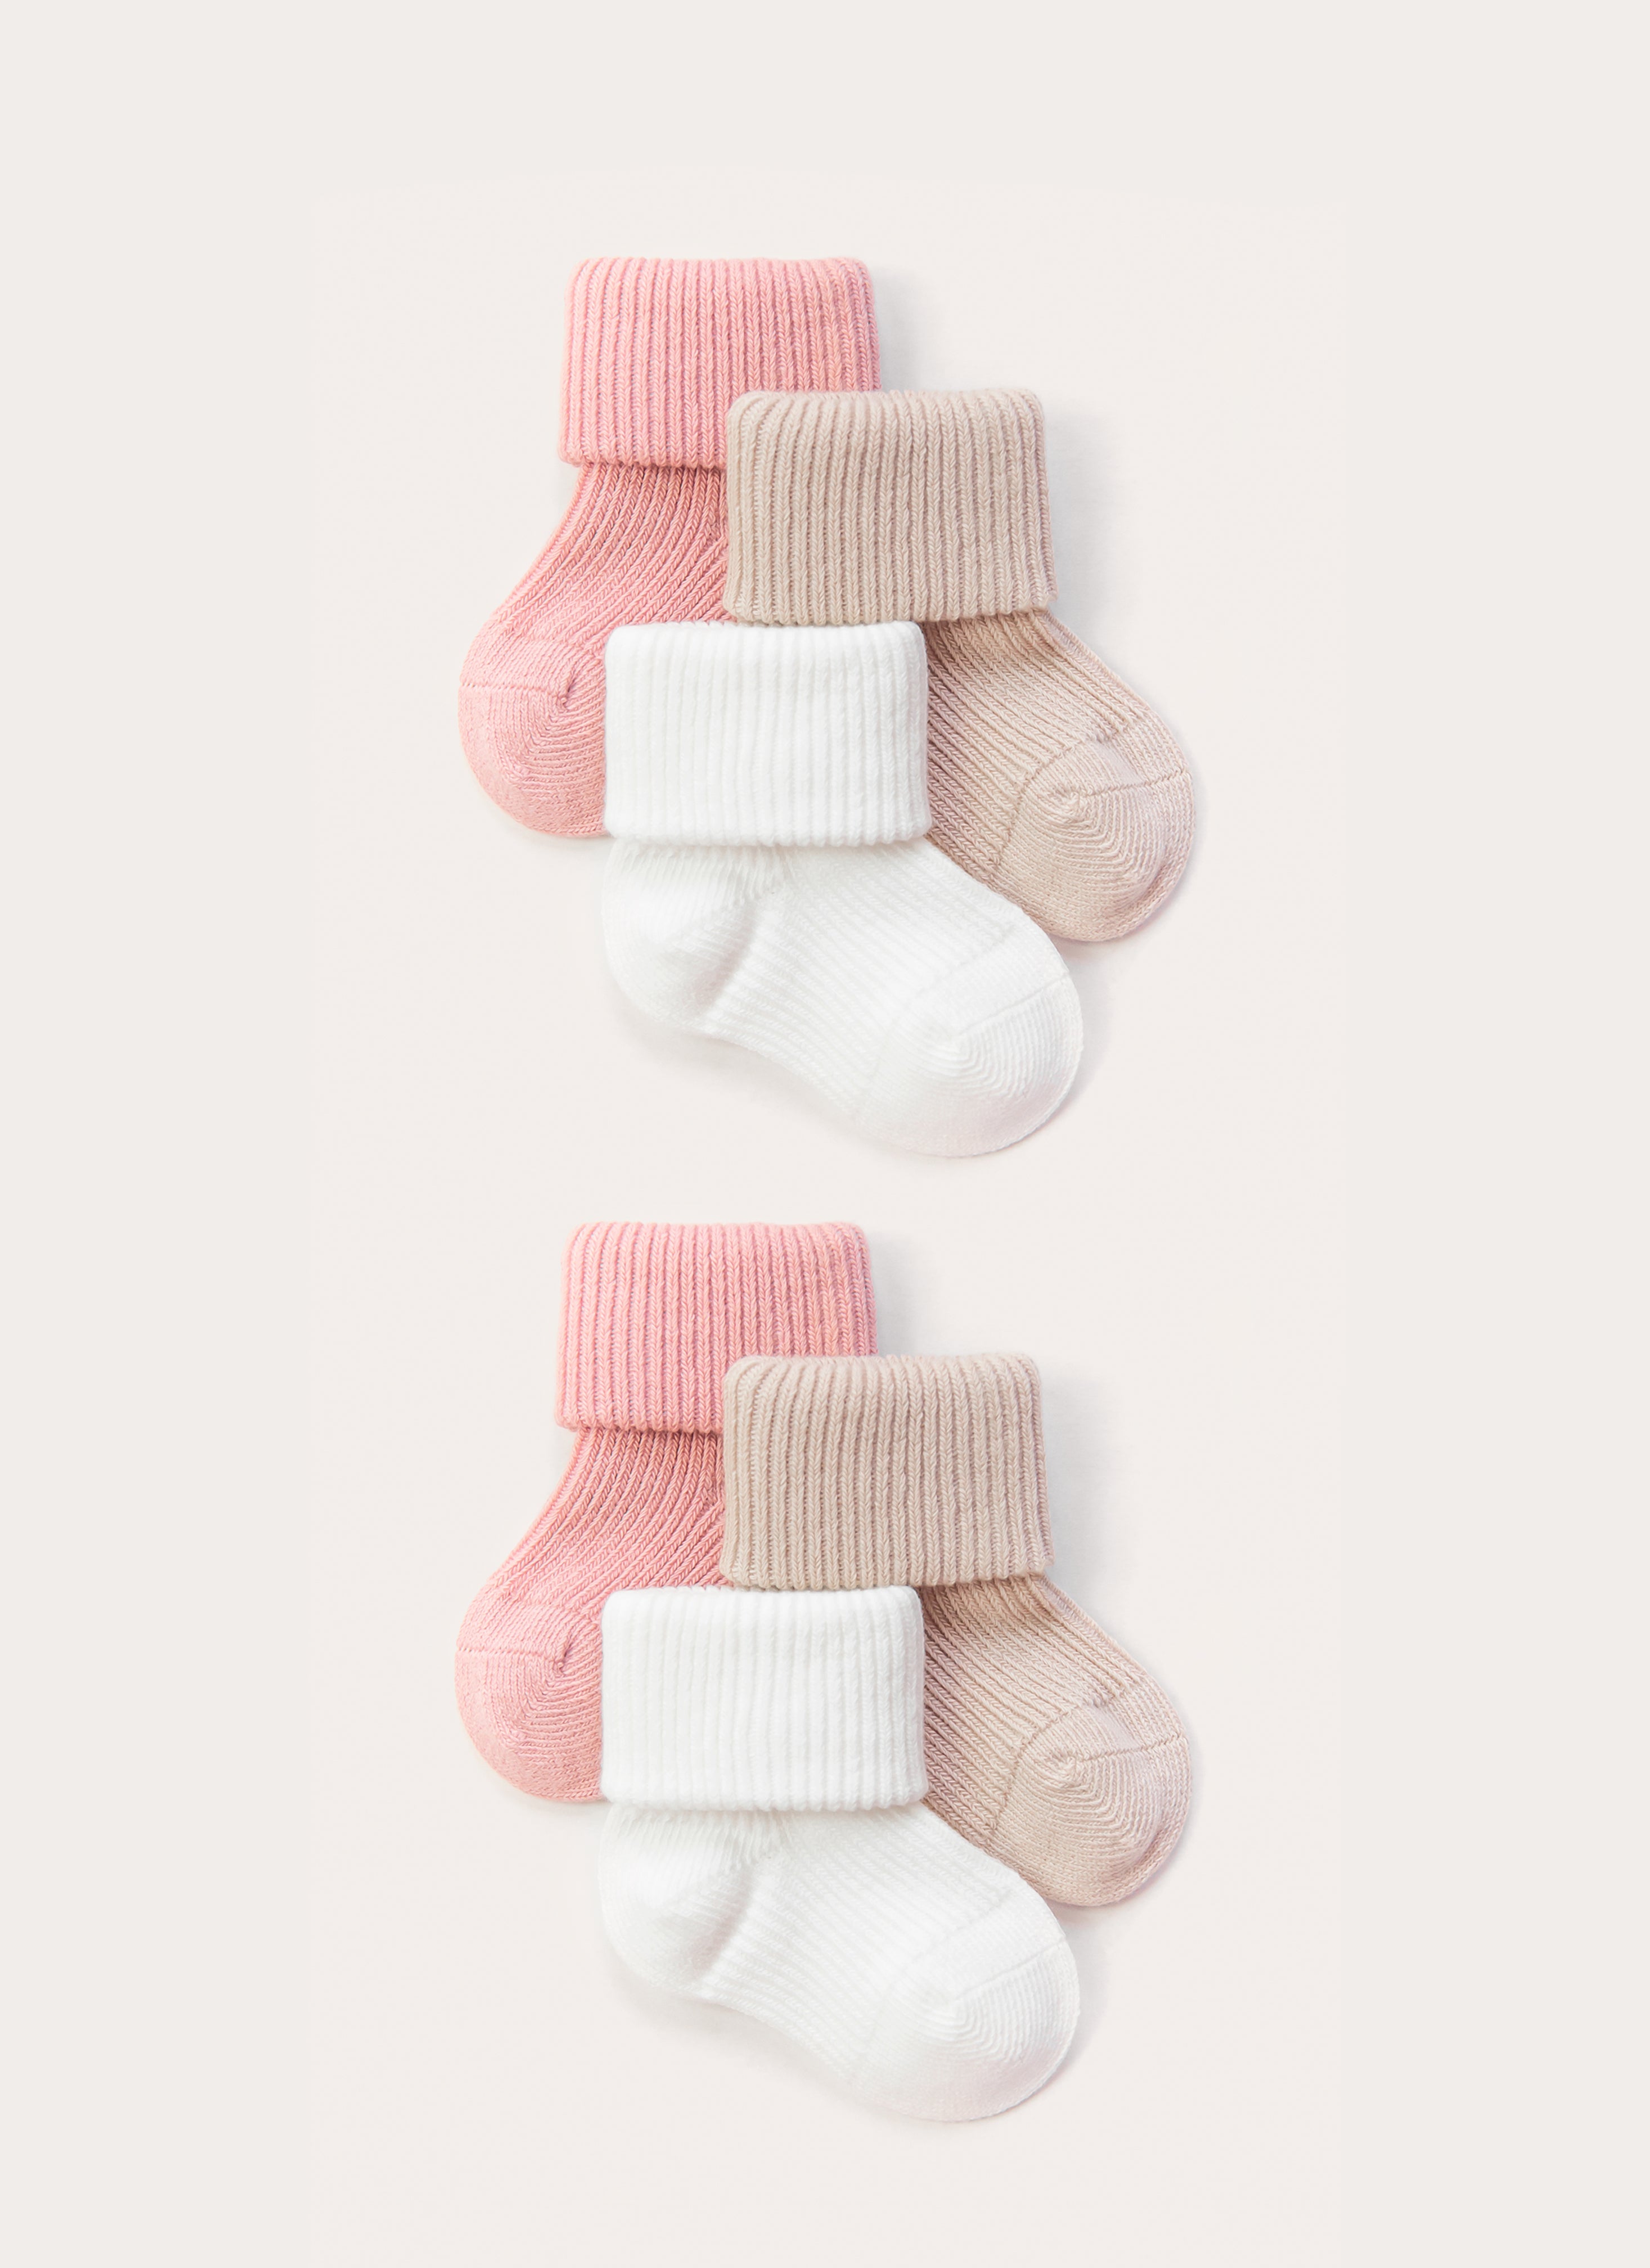 Soft Cotton Socks 6PC/Set (Pink, Nude, White)